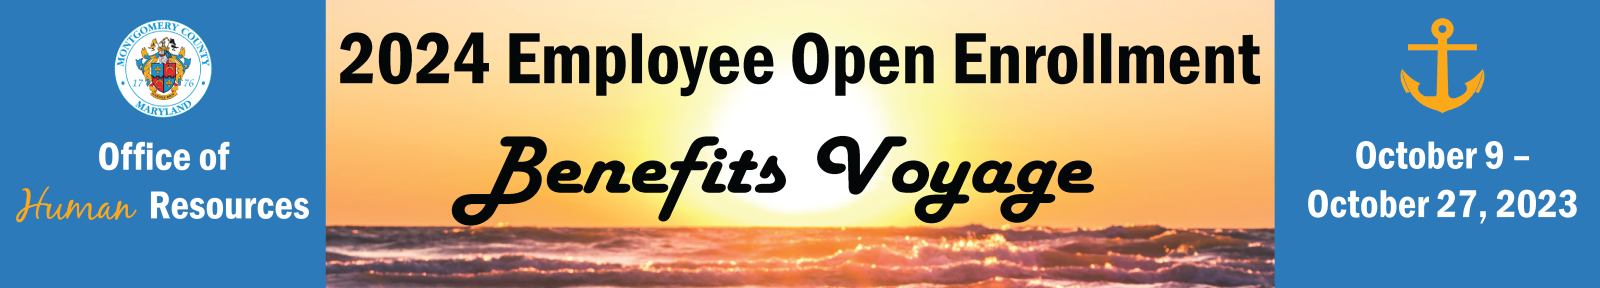 Benefits Voyage Open Enrollment 2024